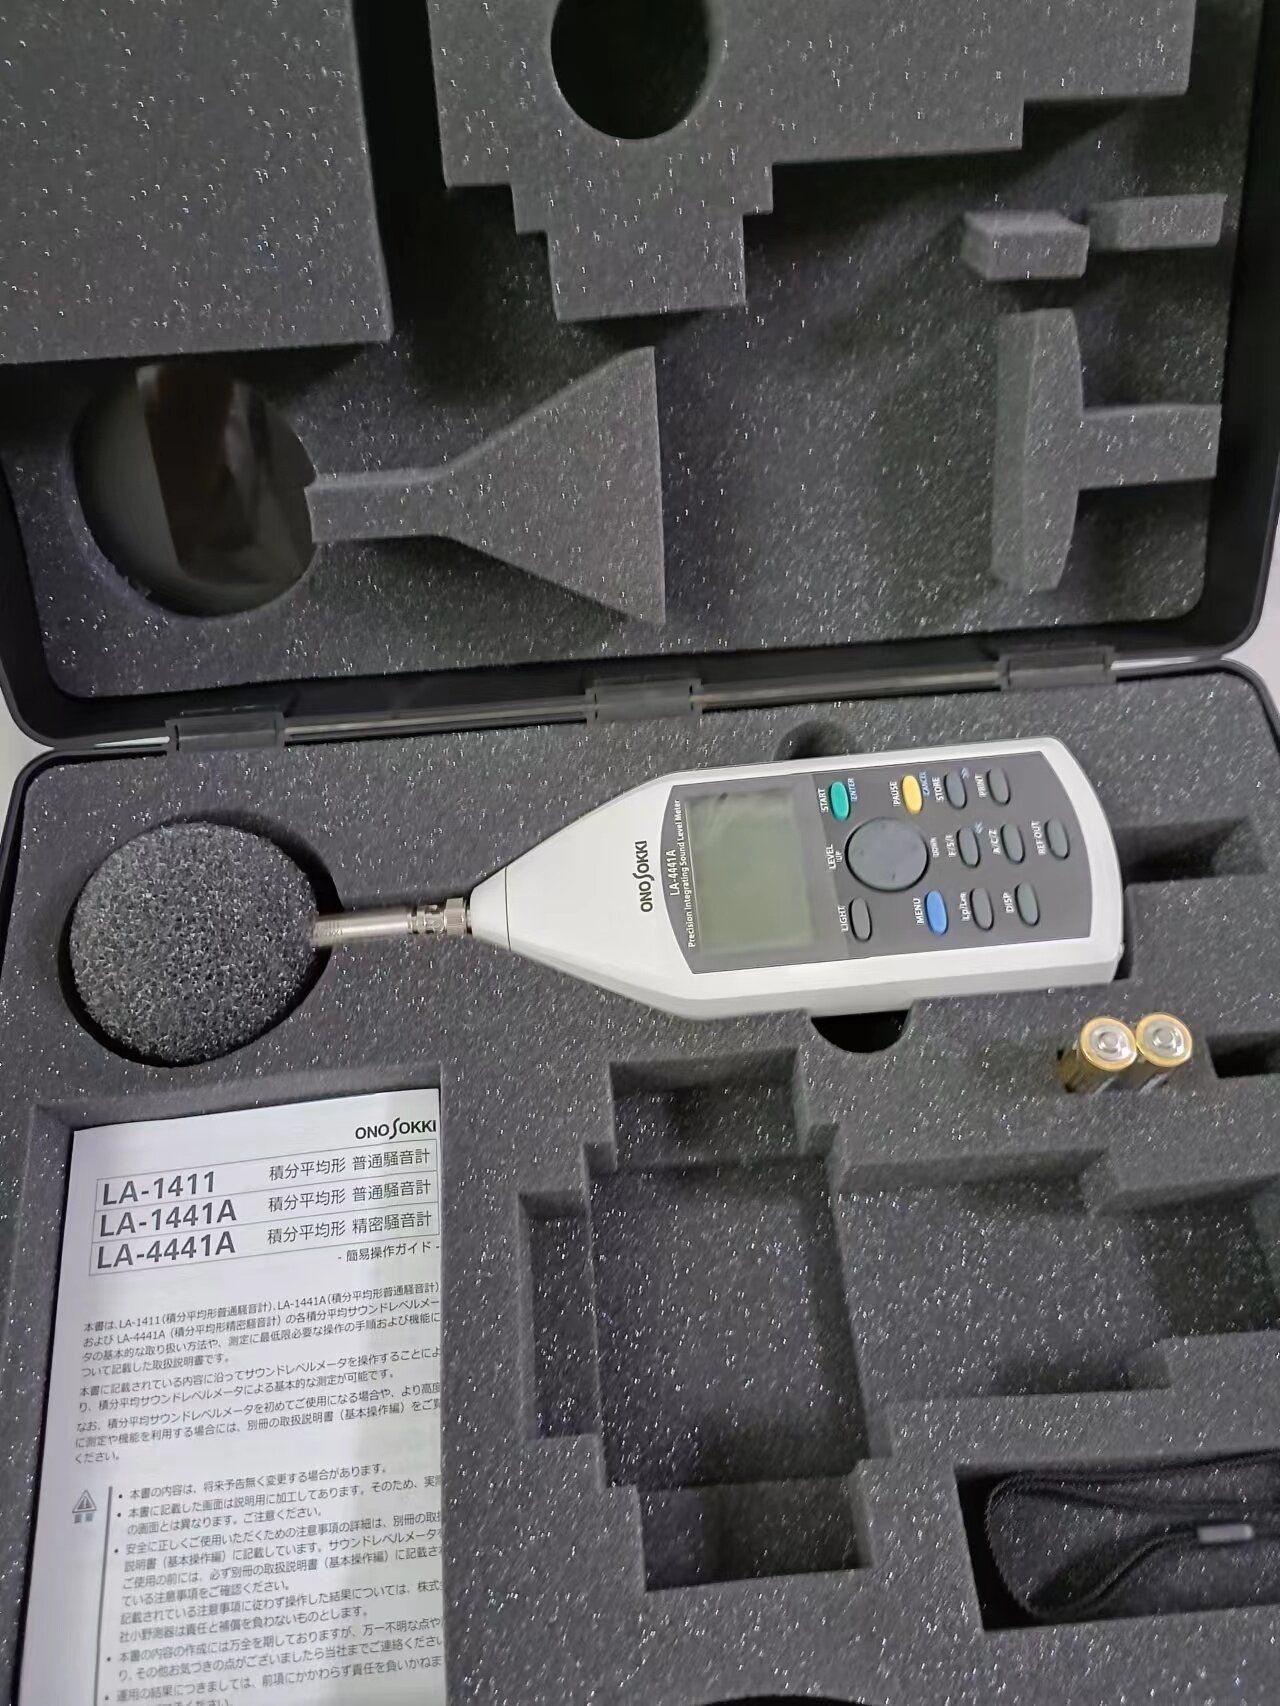 ONOSOKKI噪声测量仪器数字式噪音计LA-4441A